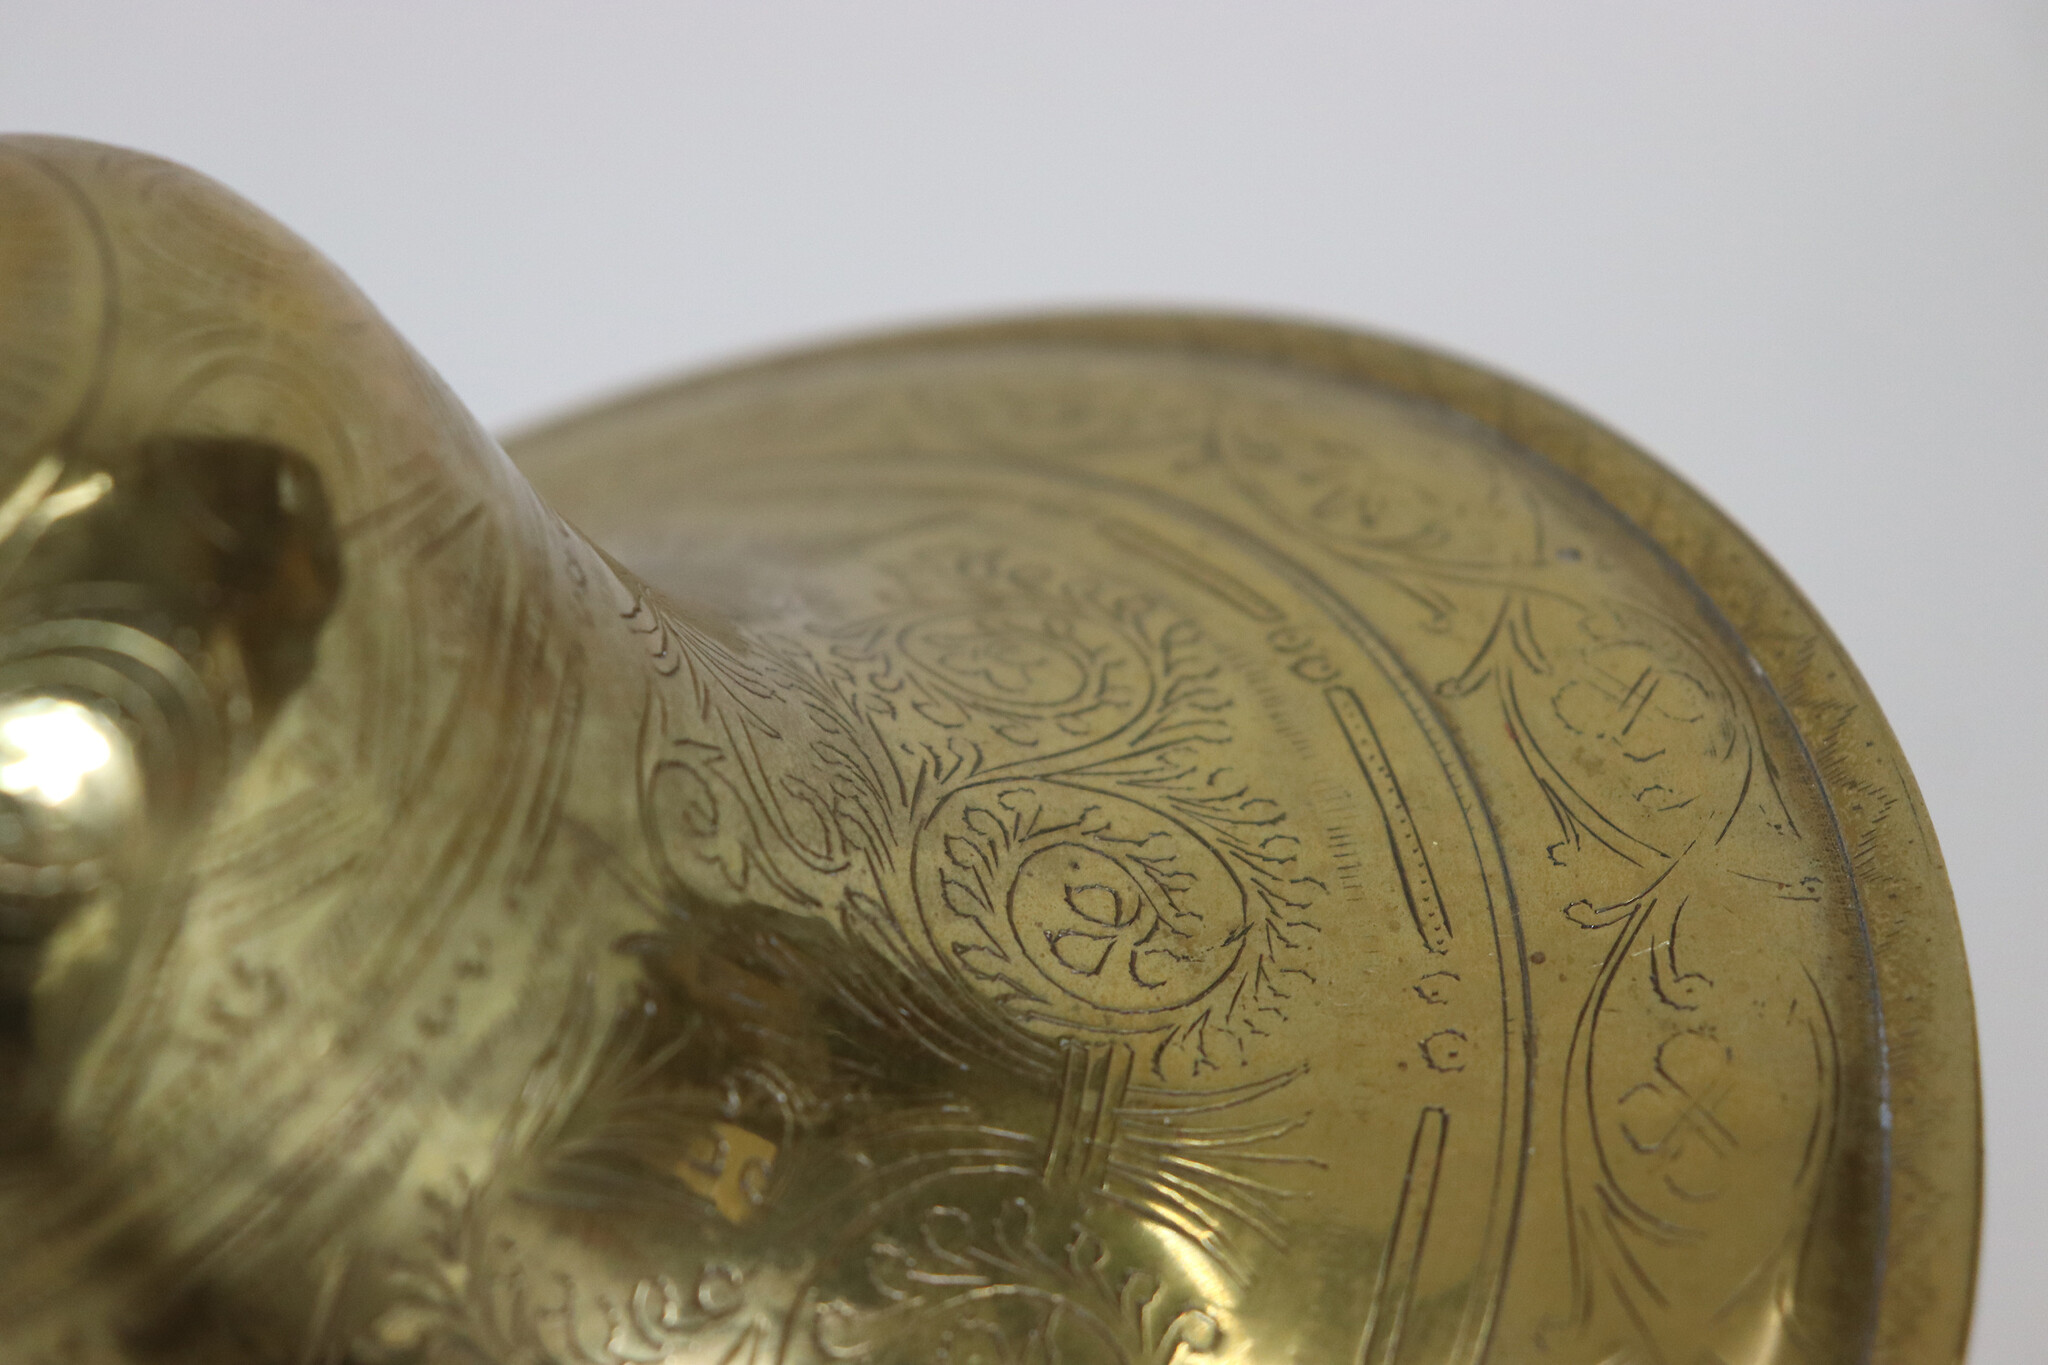 Antique Engraved Brass Hookah Shisha hubble-bubble from india pakistan No:23/M